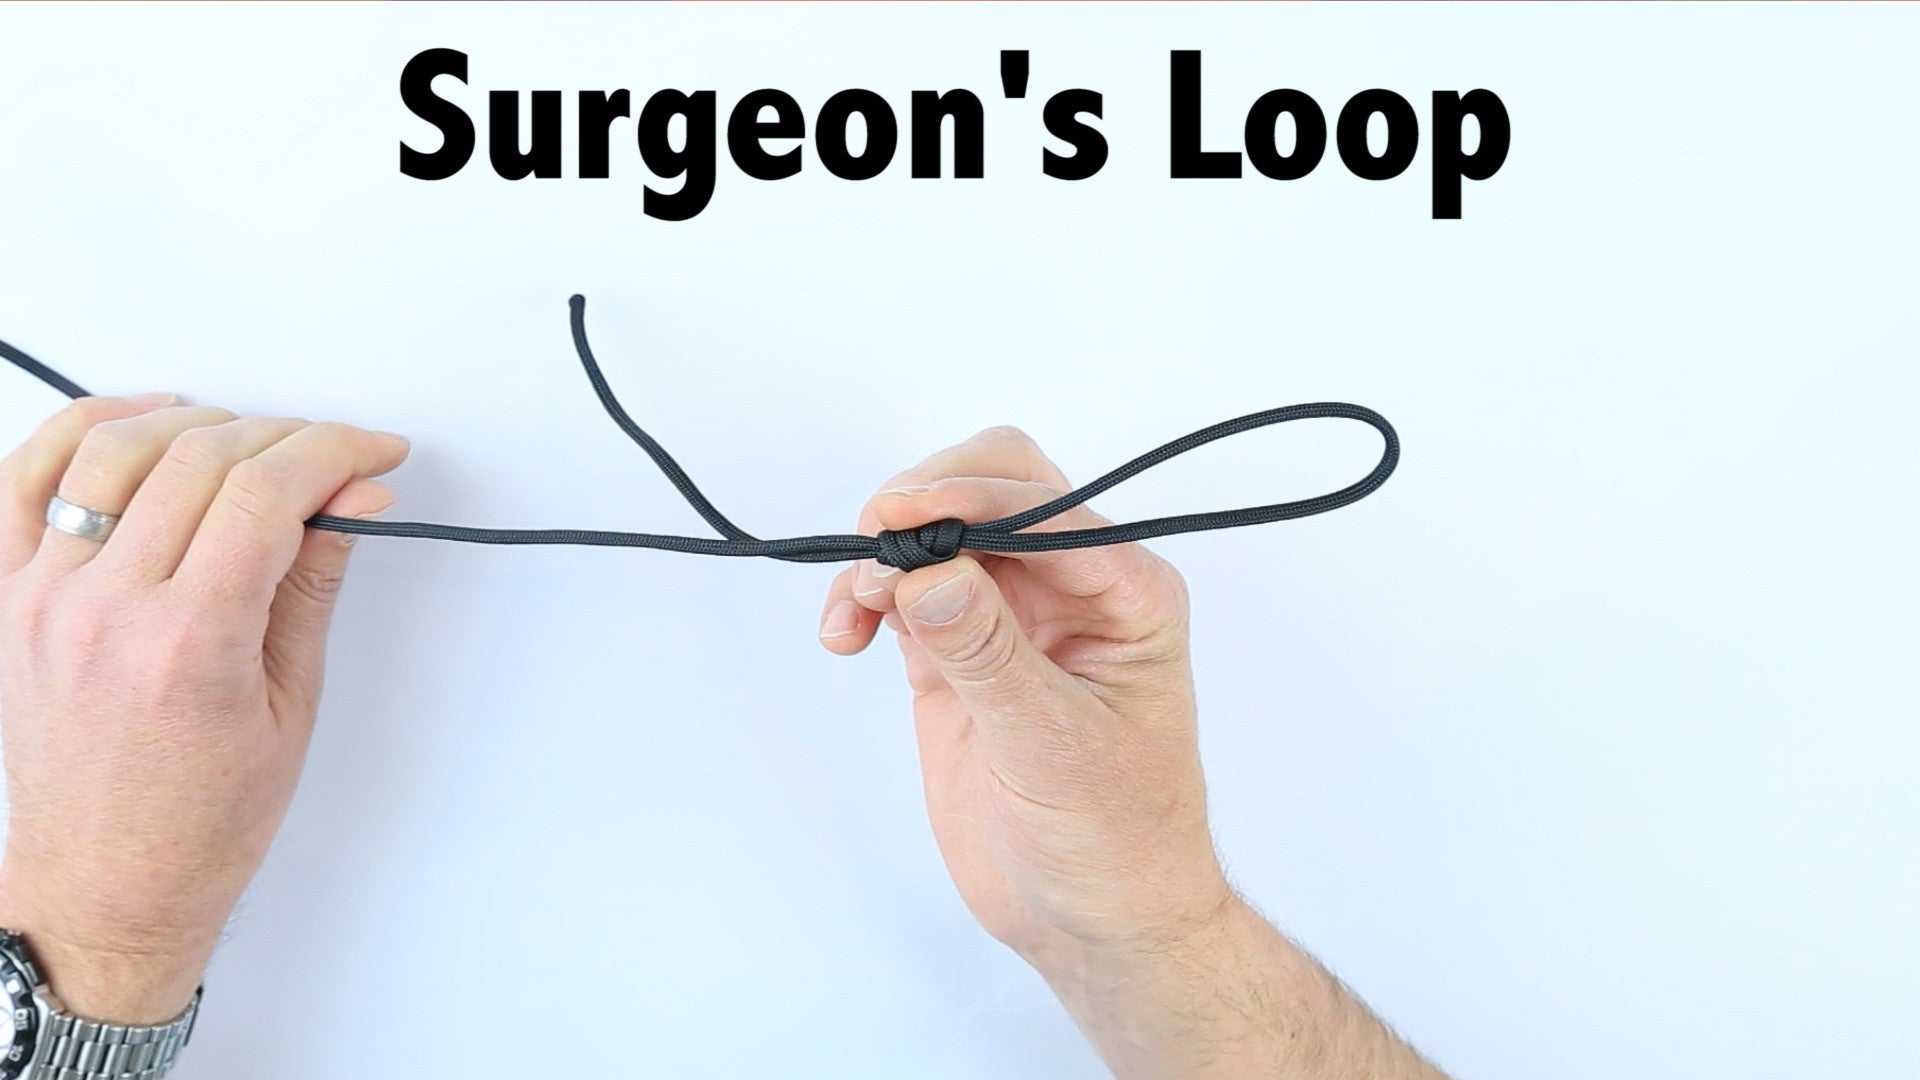 Surgeon's Loop